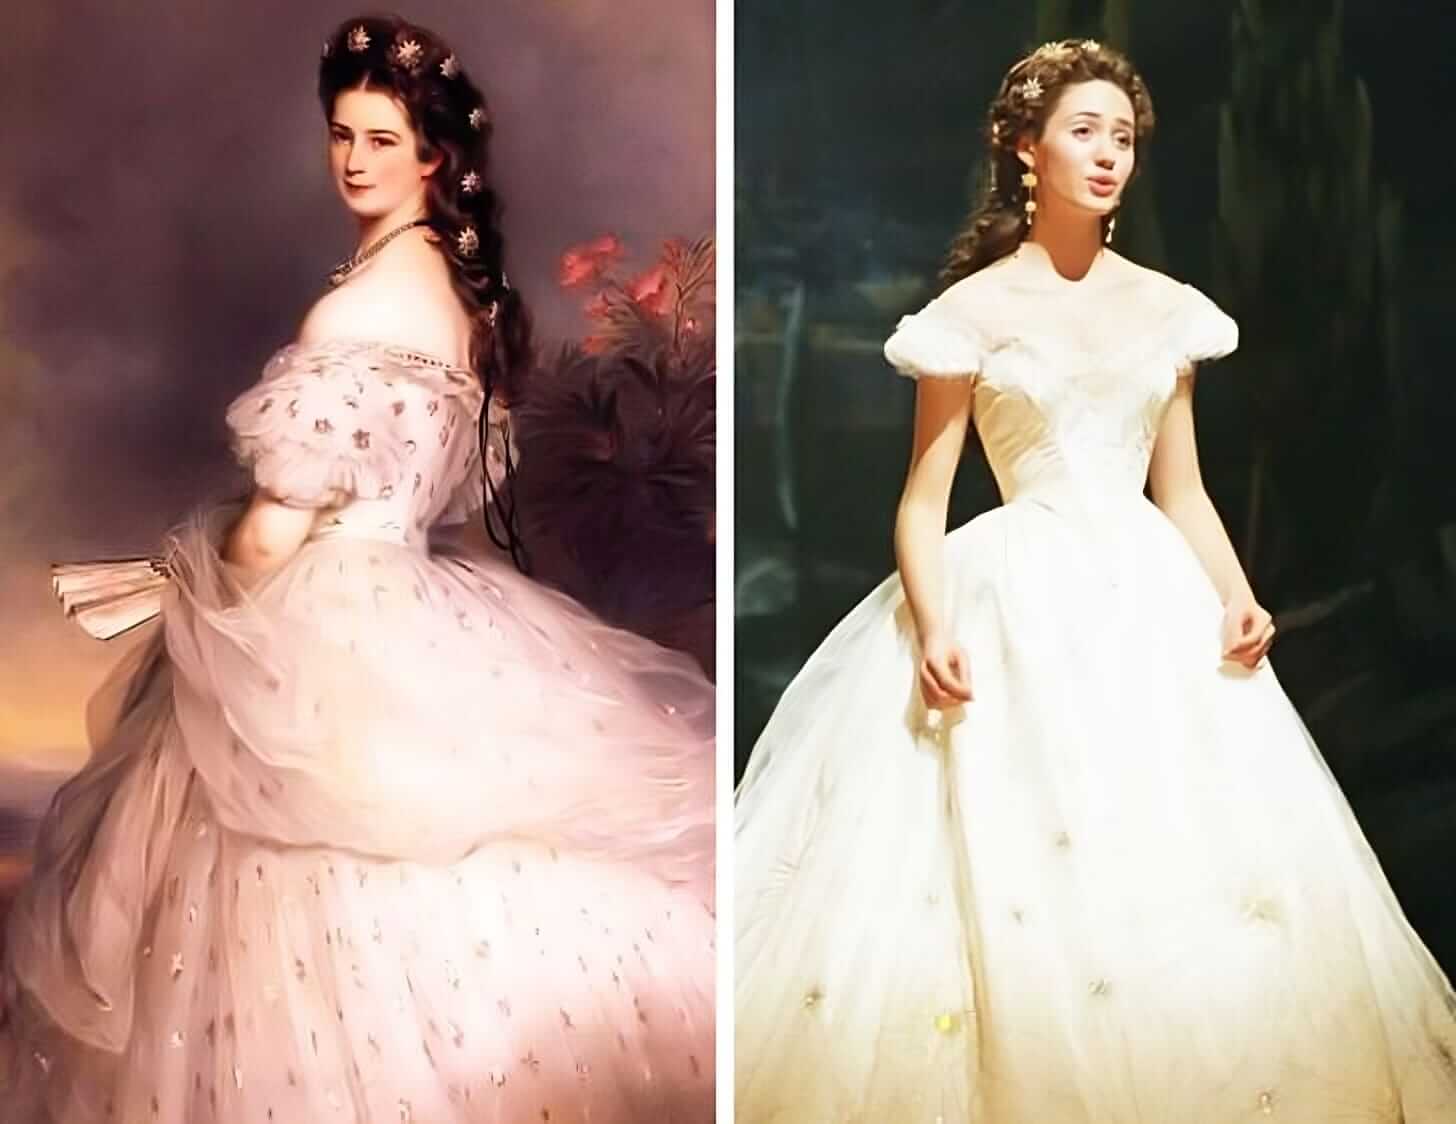 The Phantom Of The Opera — Christine’s Dress And Hair